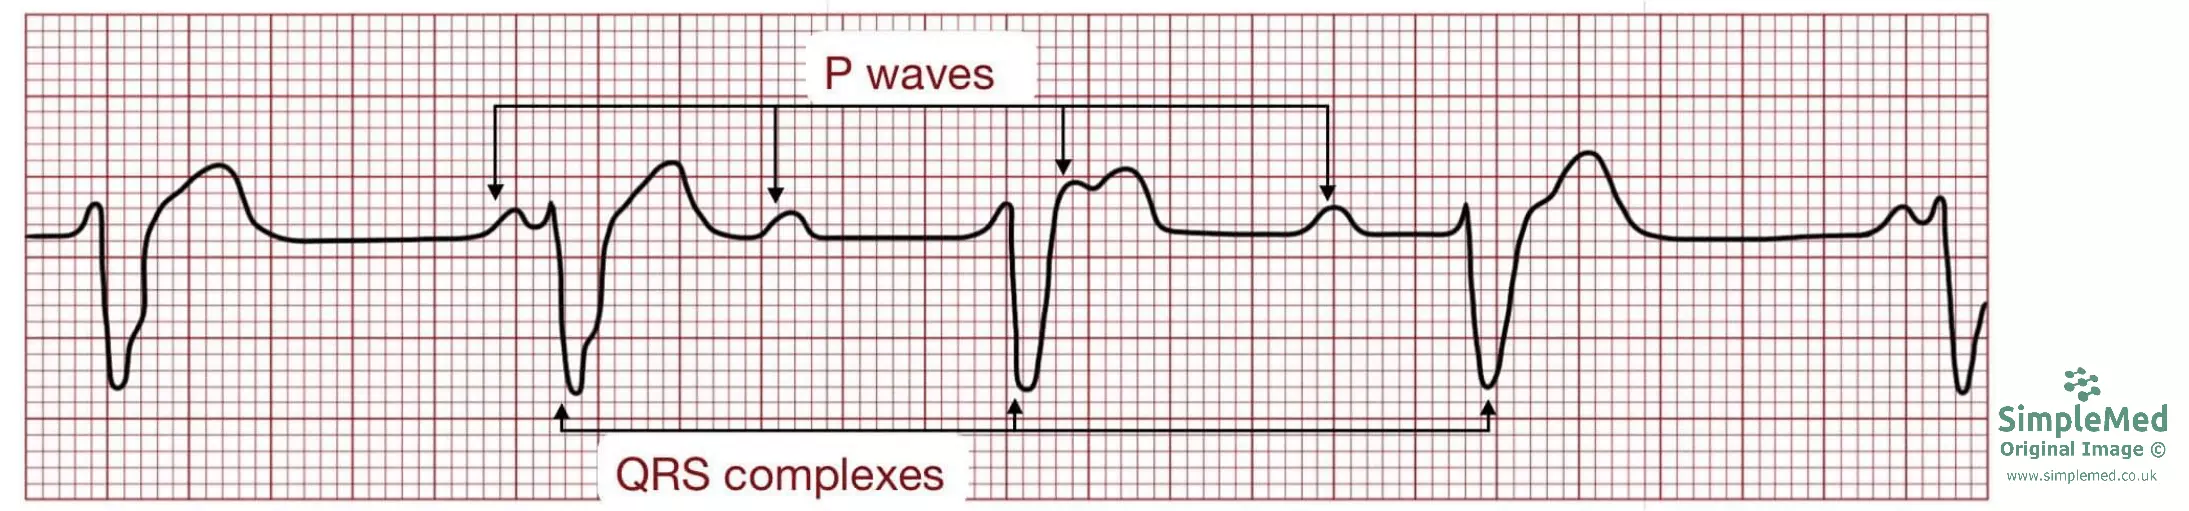 Third Degree heart block ECG SimpleMed